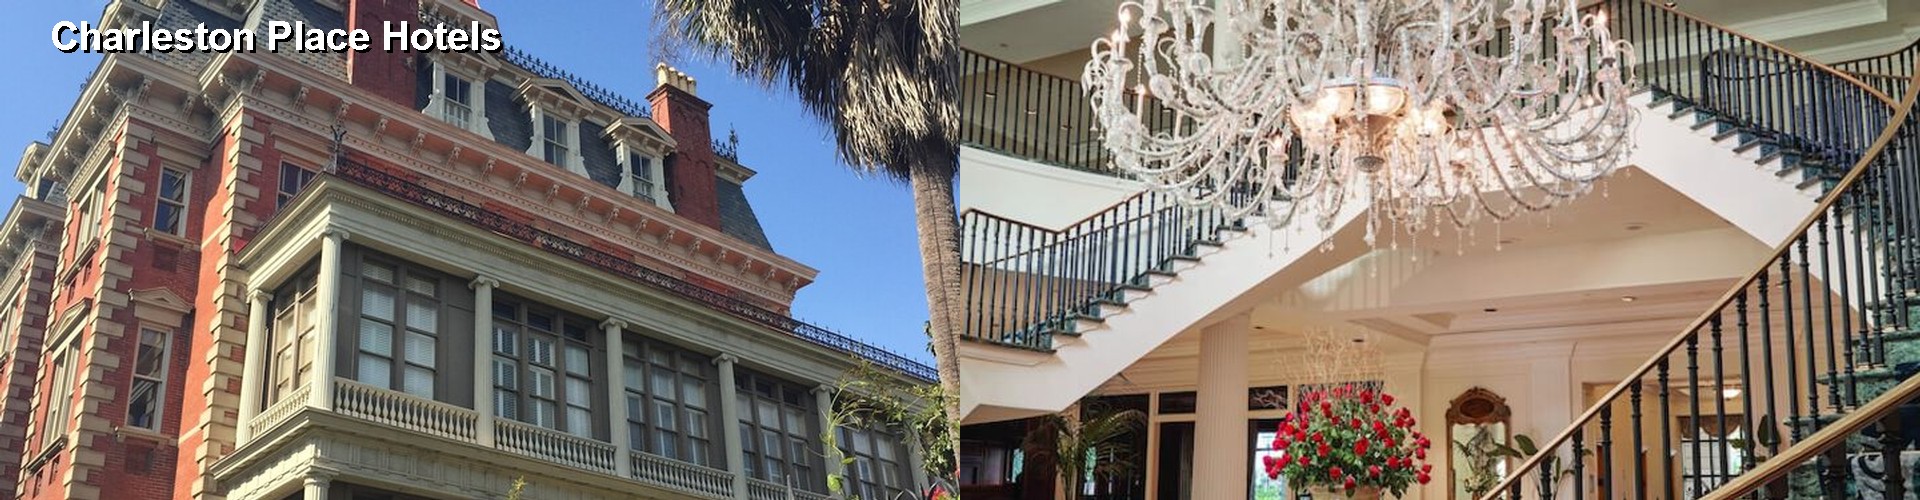 5 Best Hotels near Charleston Place